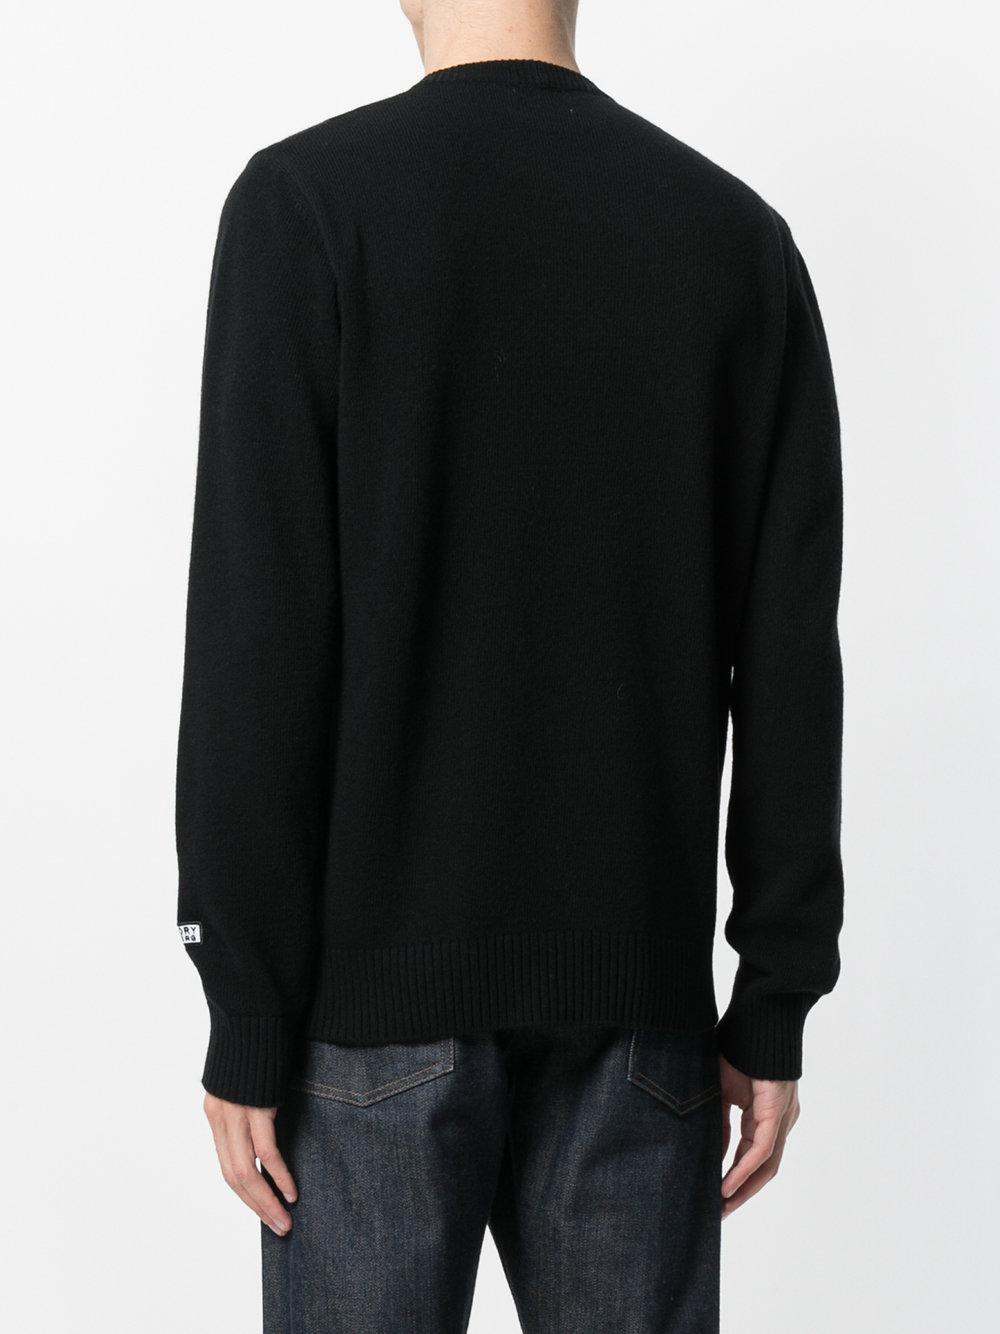 Iceberg Wool Daffy Duck Printed Sweater in Black for Men - Lyst